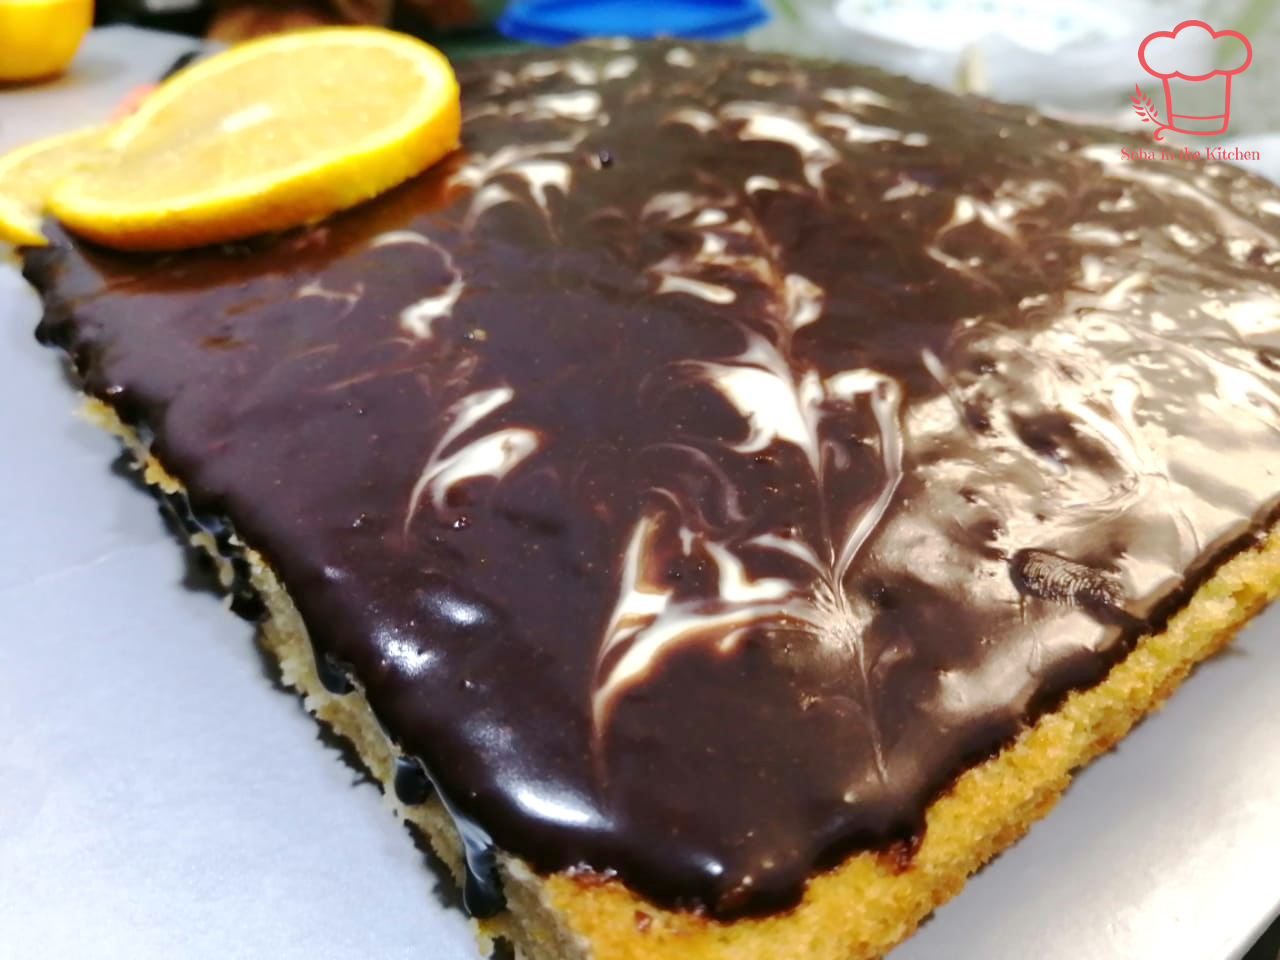 ORANGE CAKE WITH CHOCOLATE GANACHE